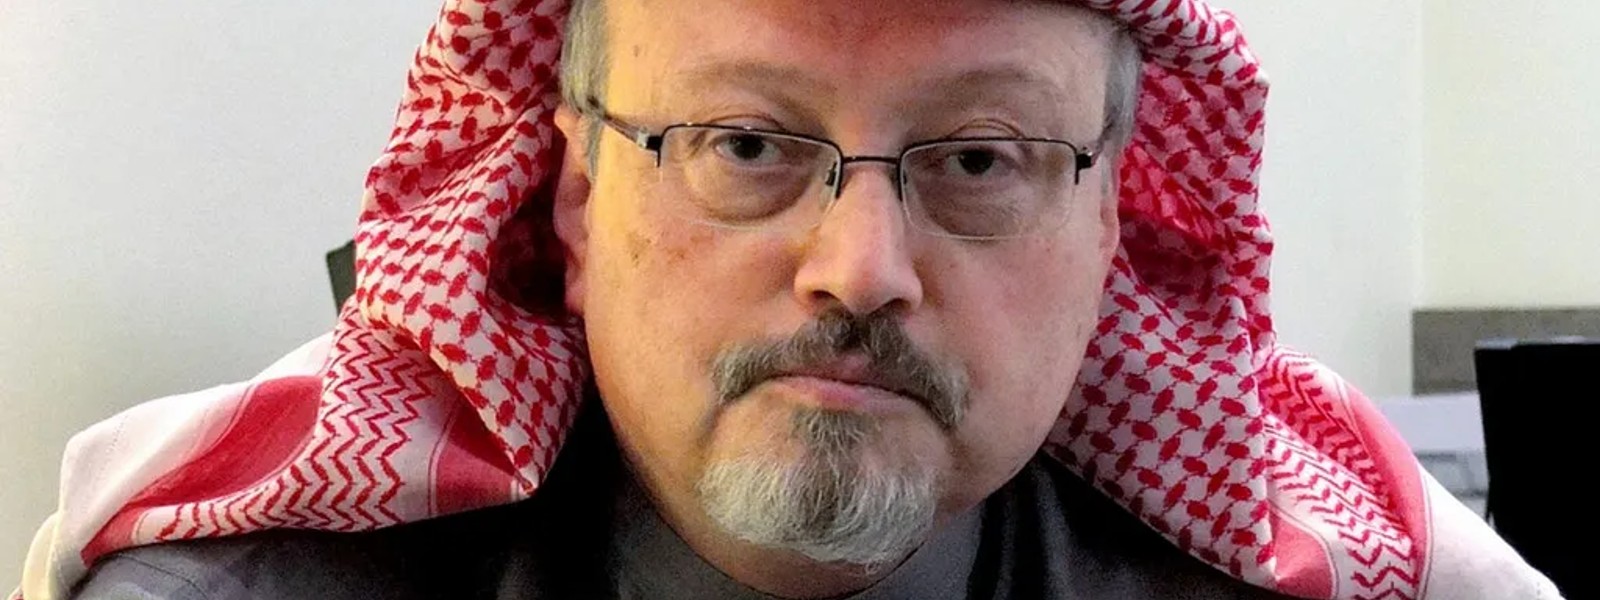 Saudi national arrested over suspected involvement in Khashoggi murder